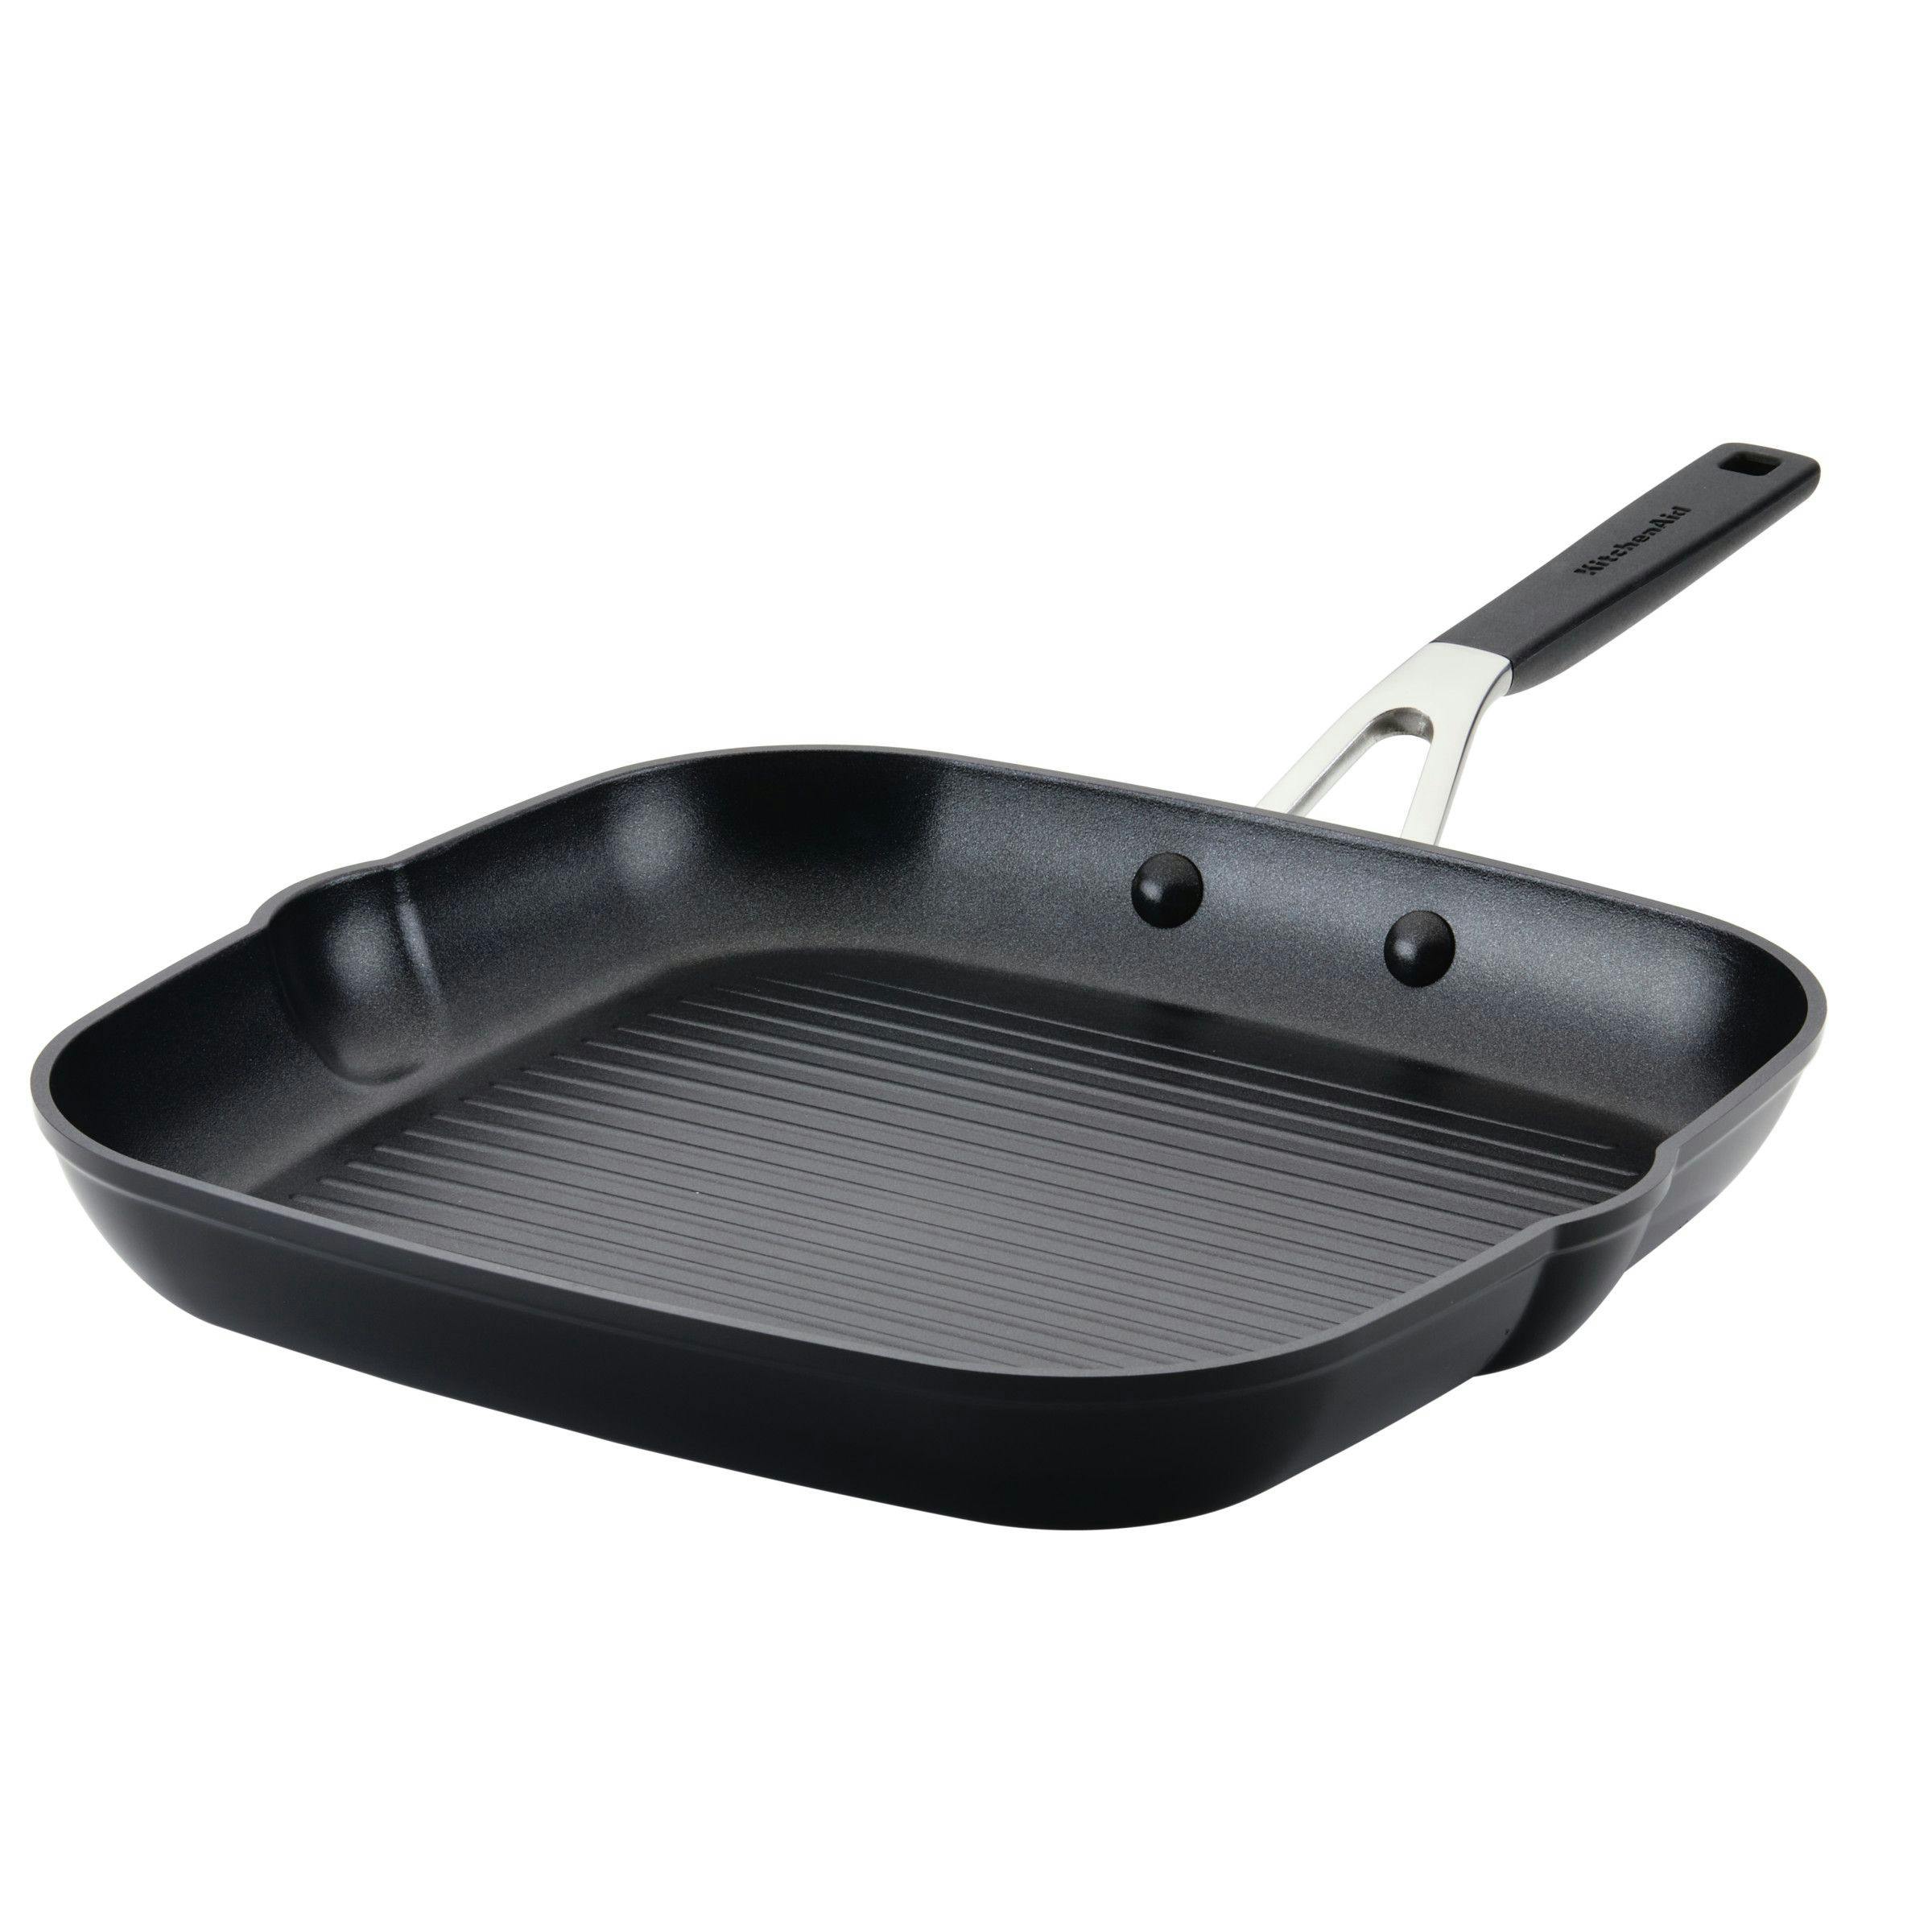 KitchenAid Hard Anodized Square Grill Pan, 11.25-Inch, Onyx Black